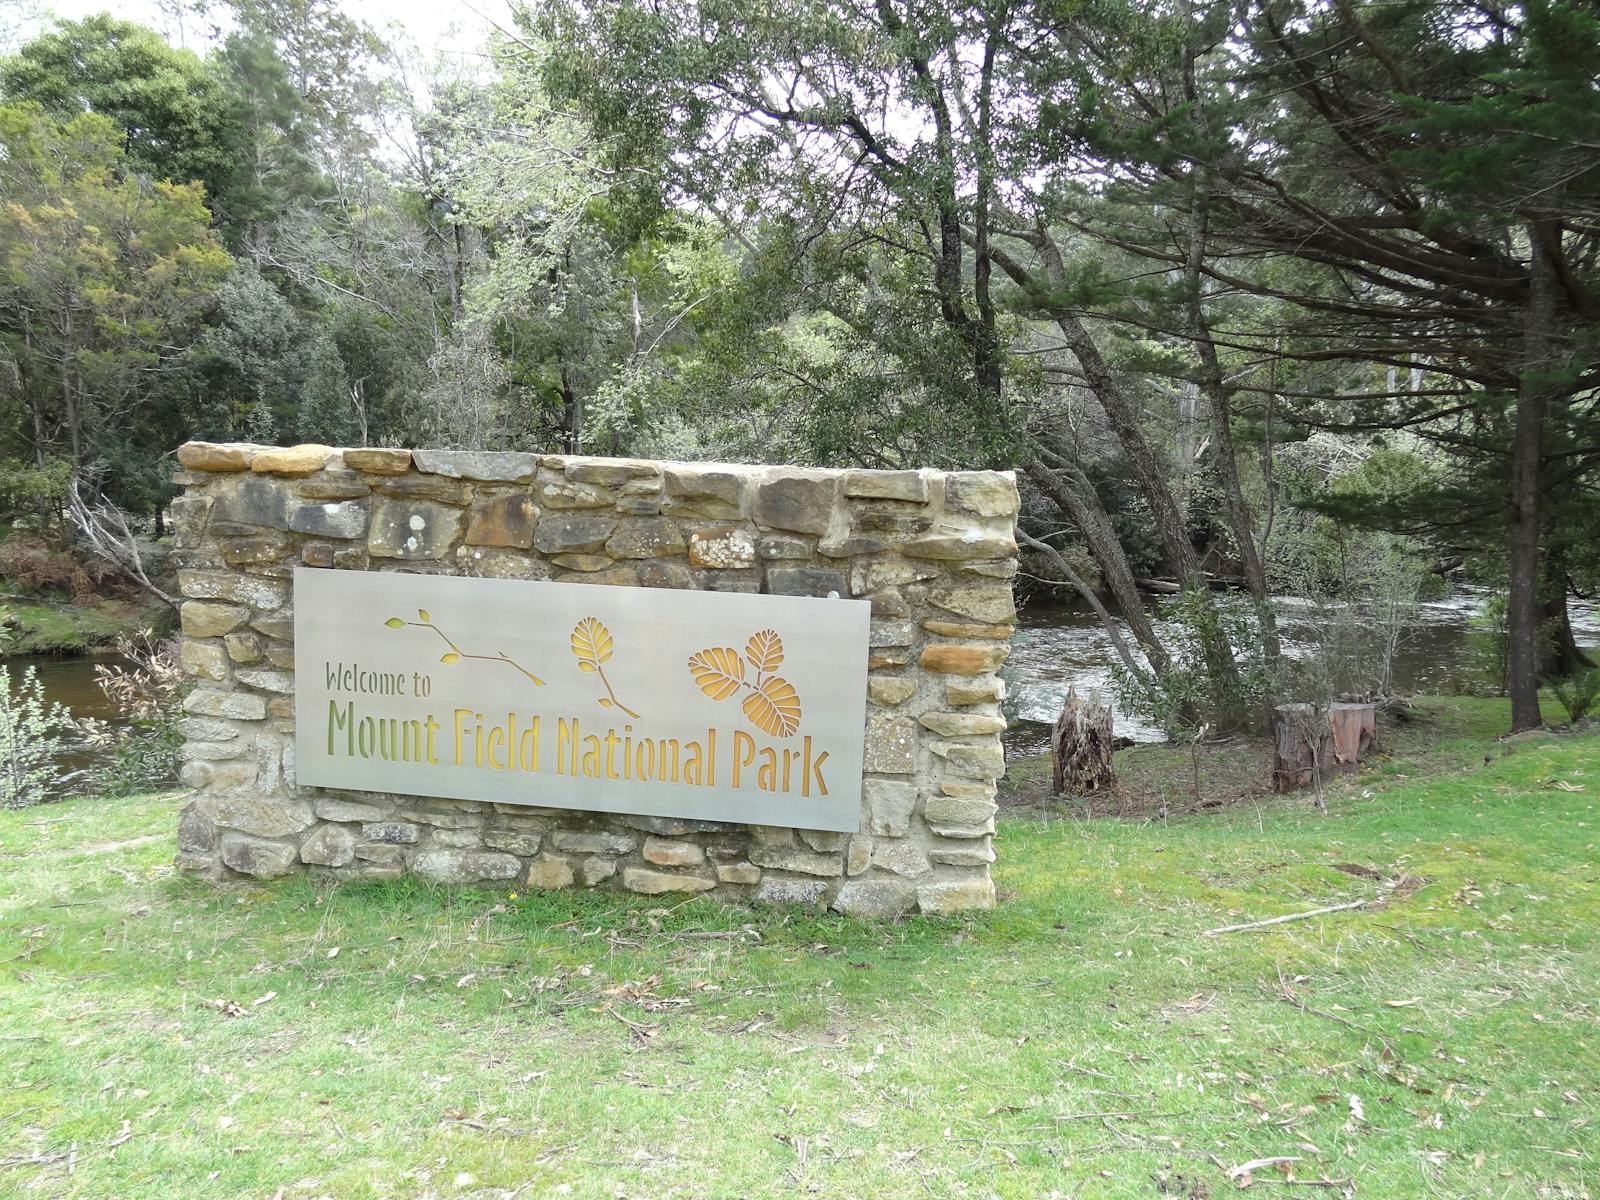 Mt Field National Park